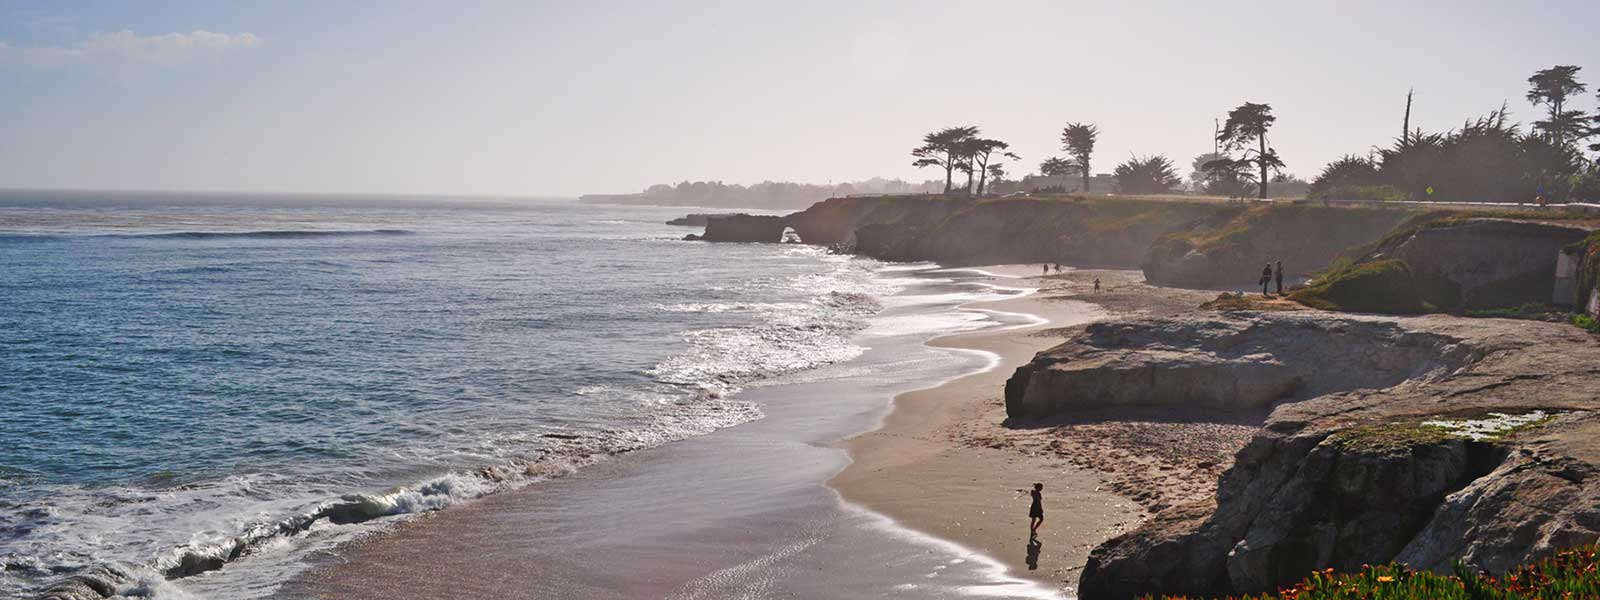 Beach scene in Santa Cruz